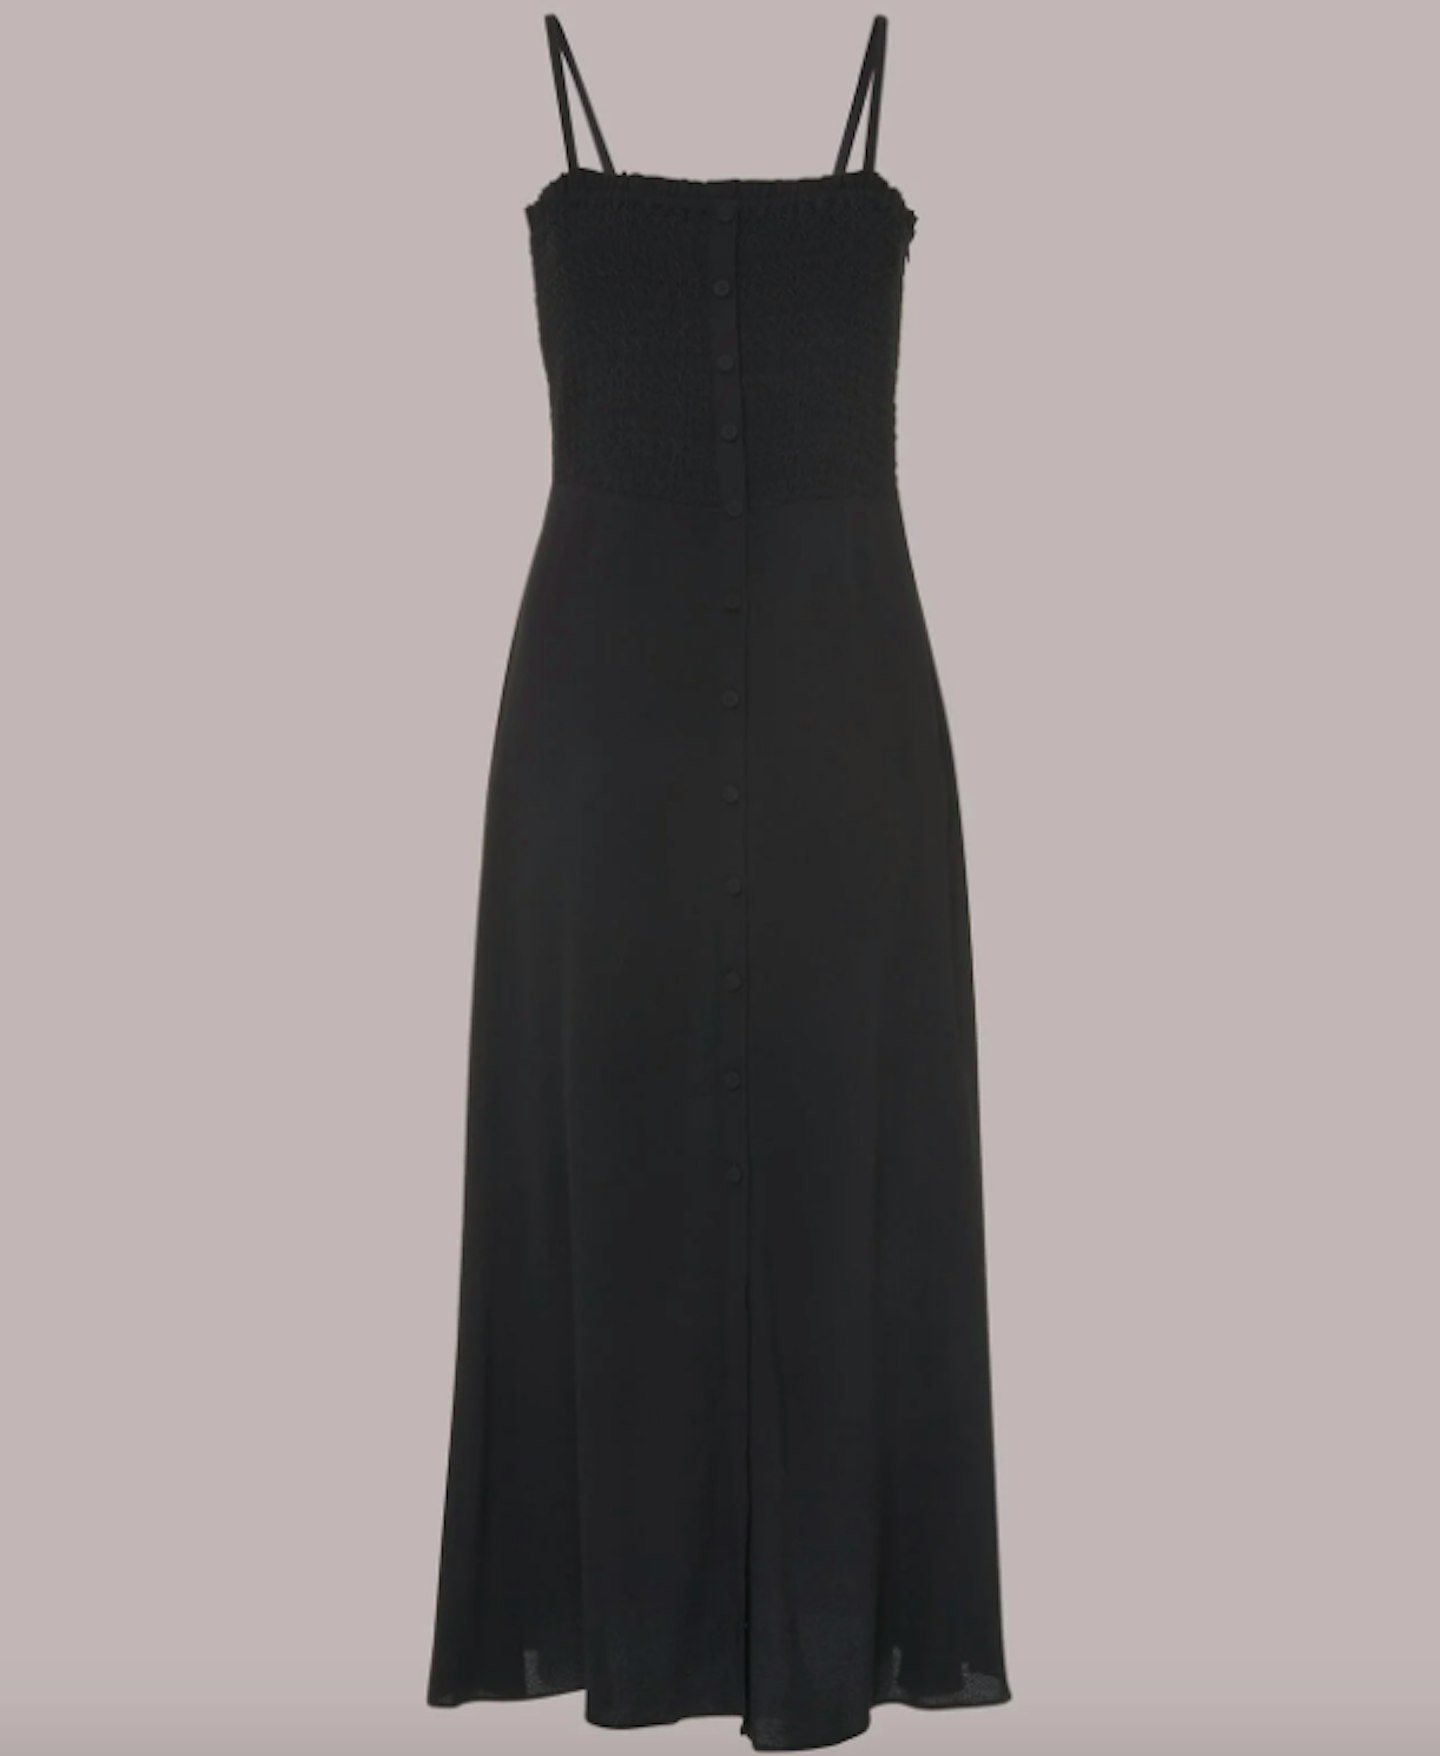 Whistles, Gracia Smocked Dress, £139